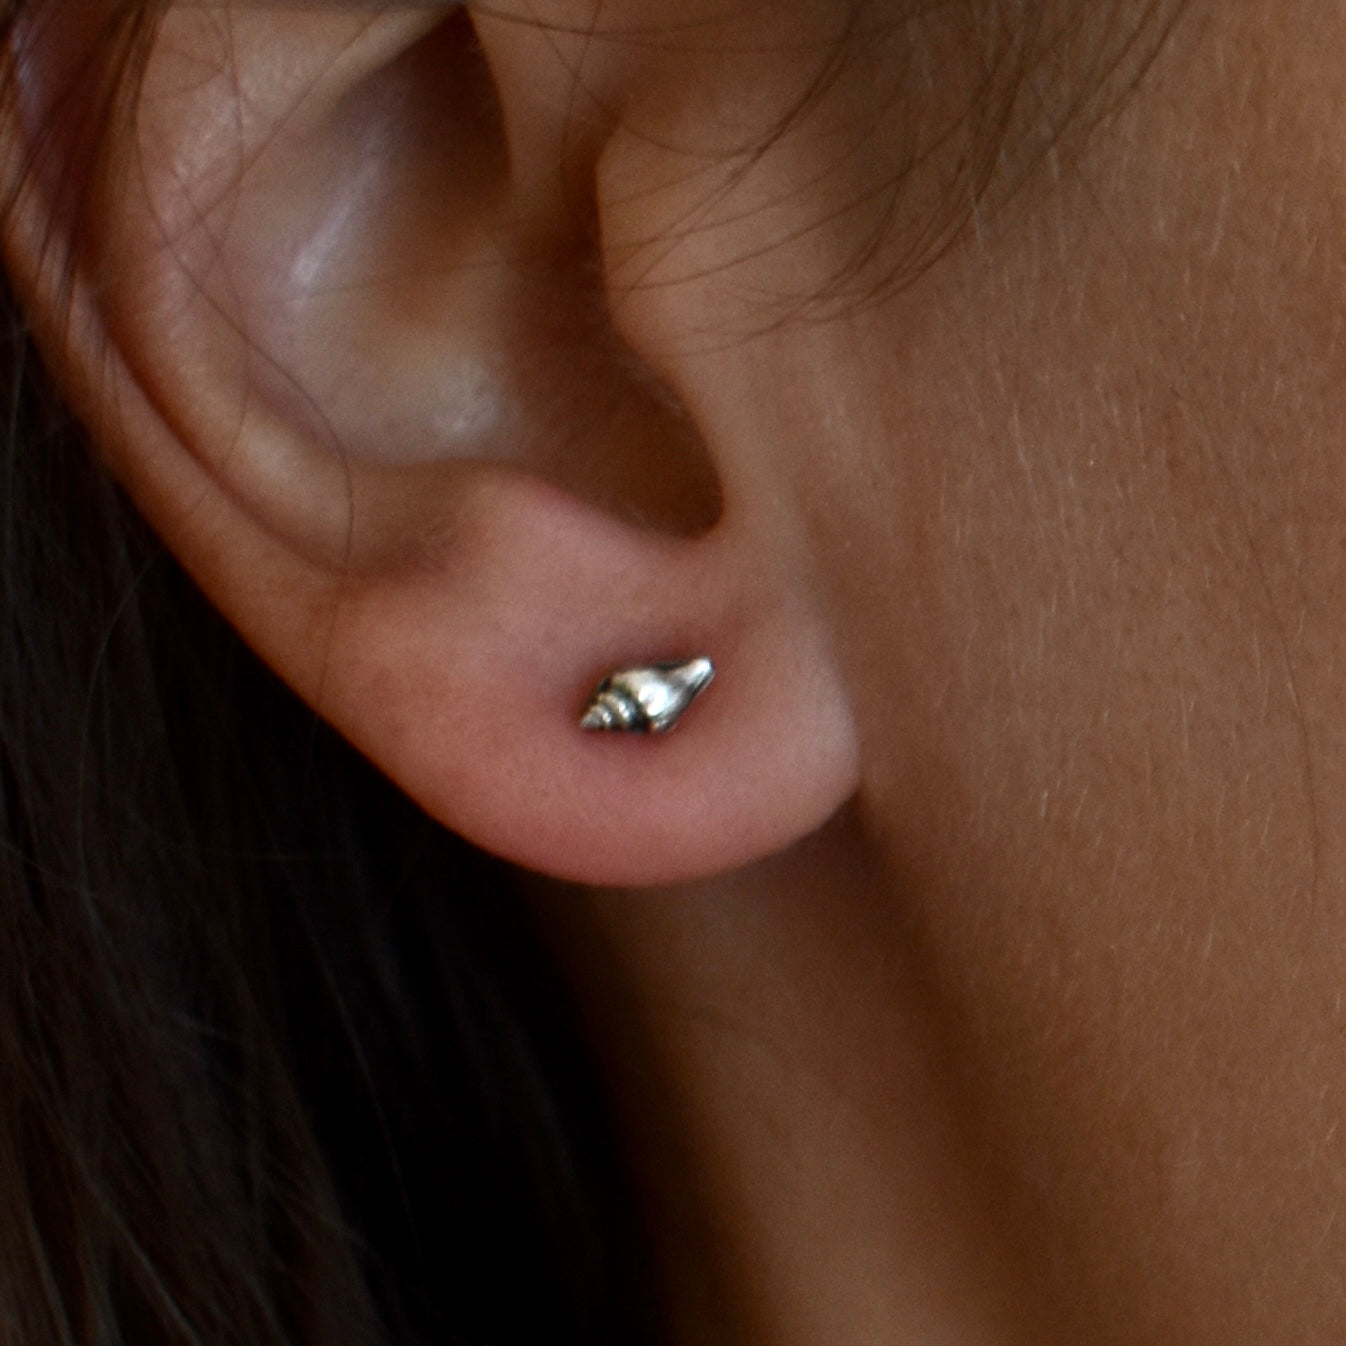 tiny shell stud earrings